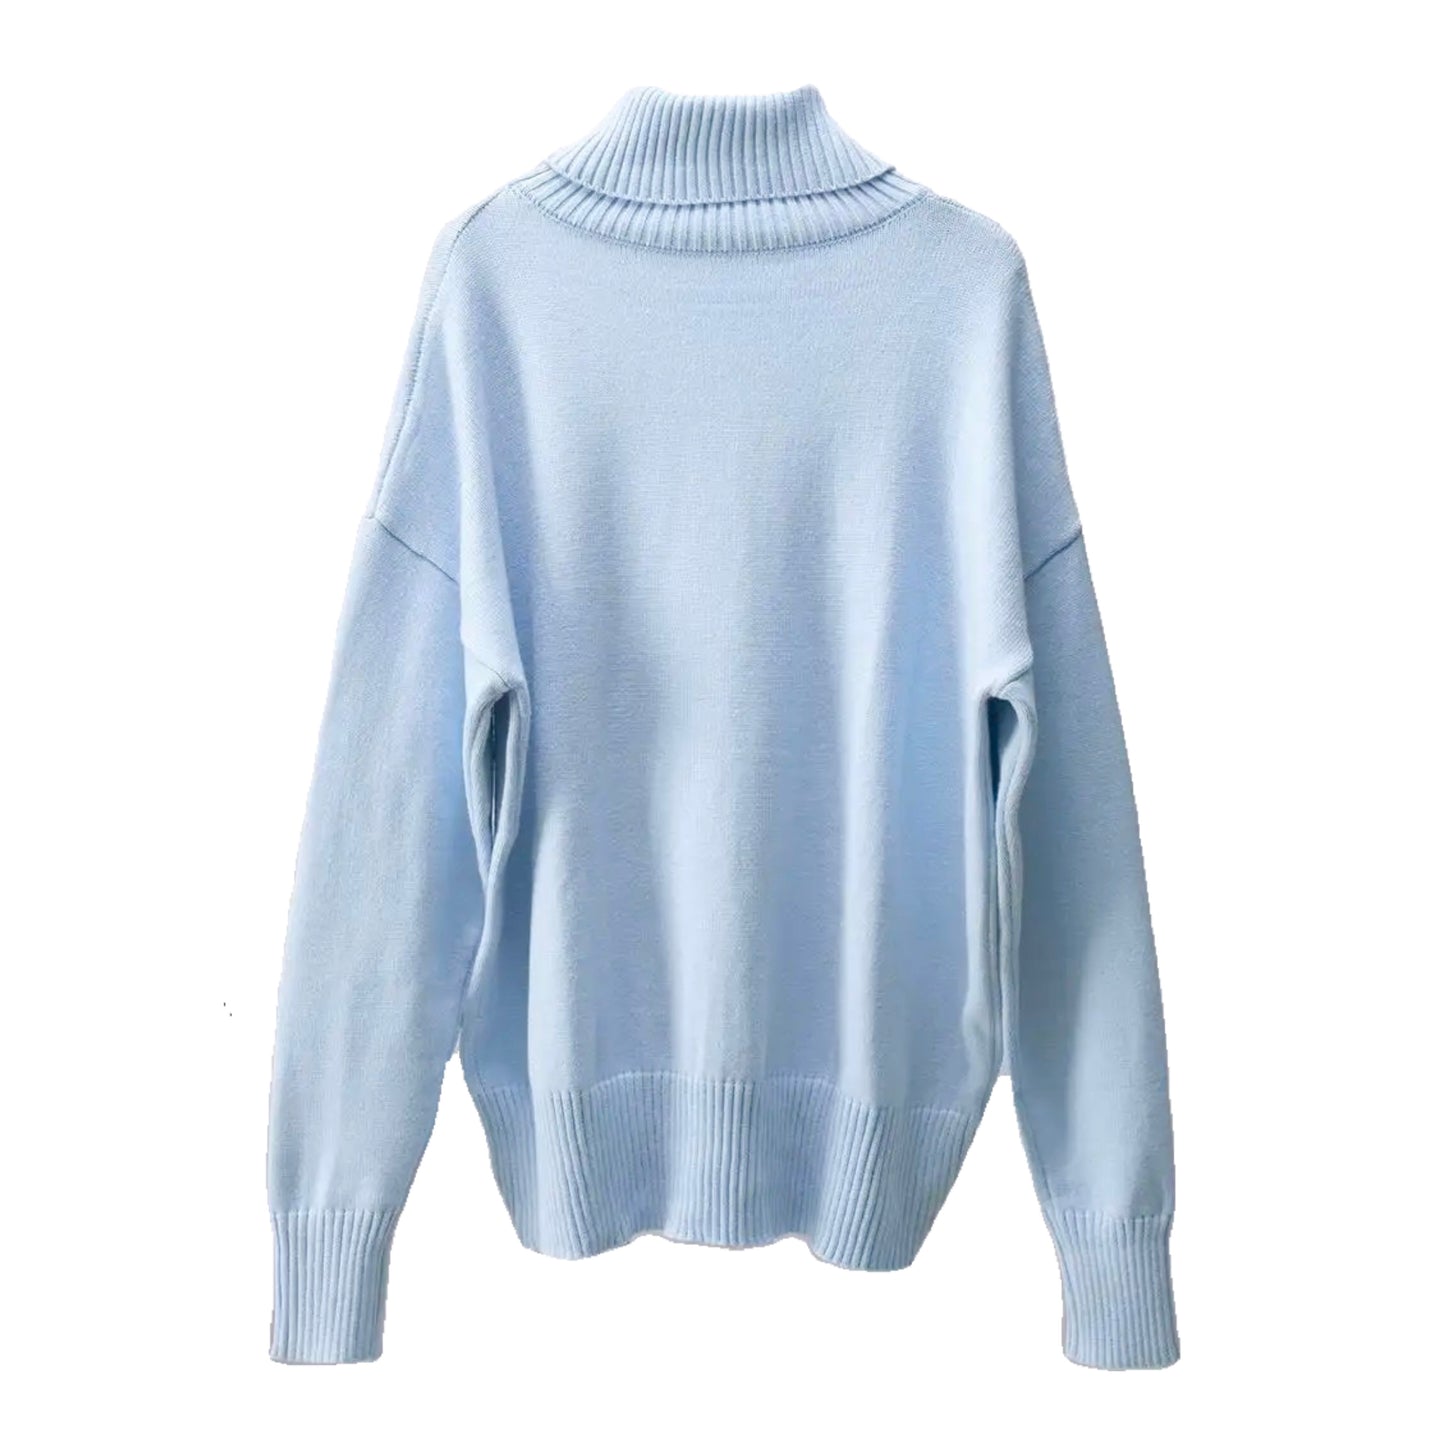 Light Blue Knit Turtleneck Oversized Pull Over Sweater